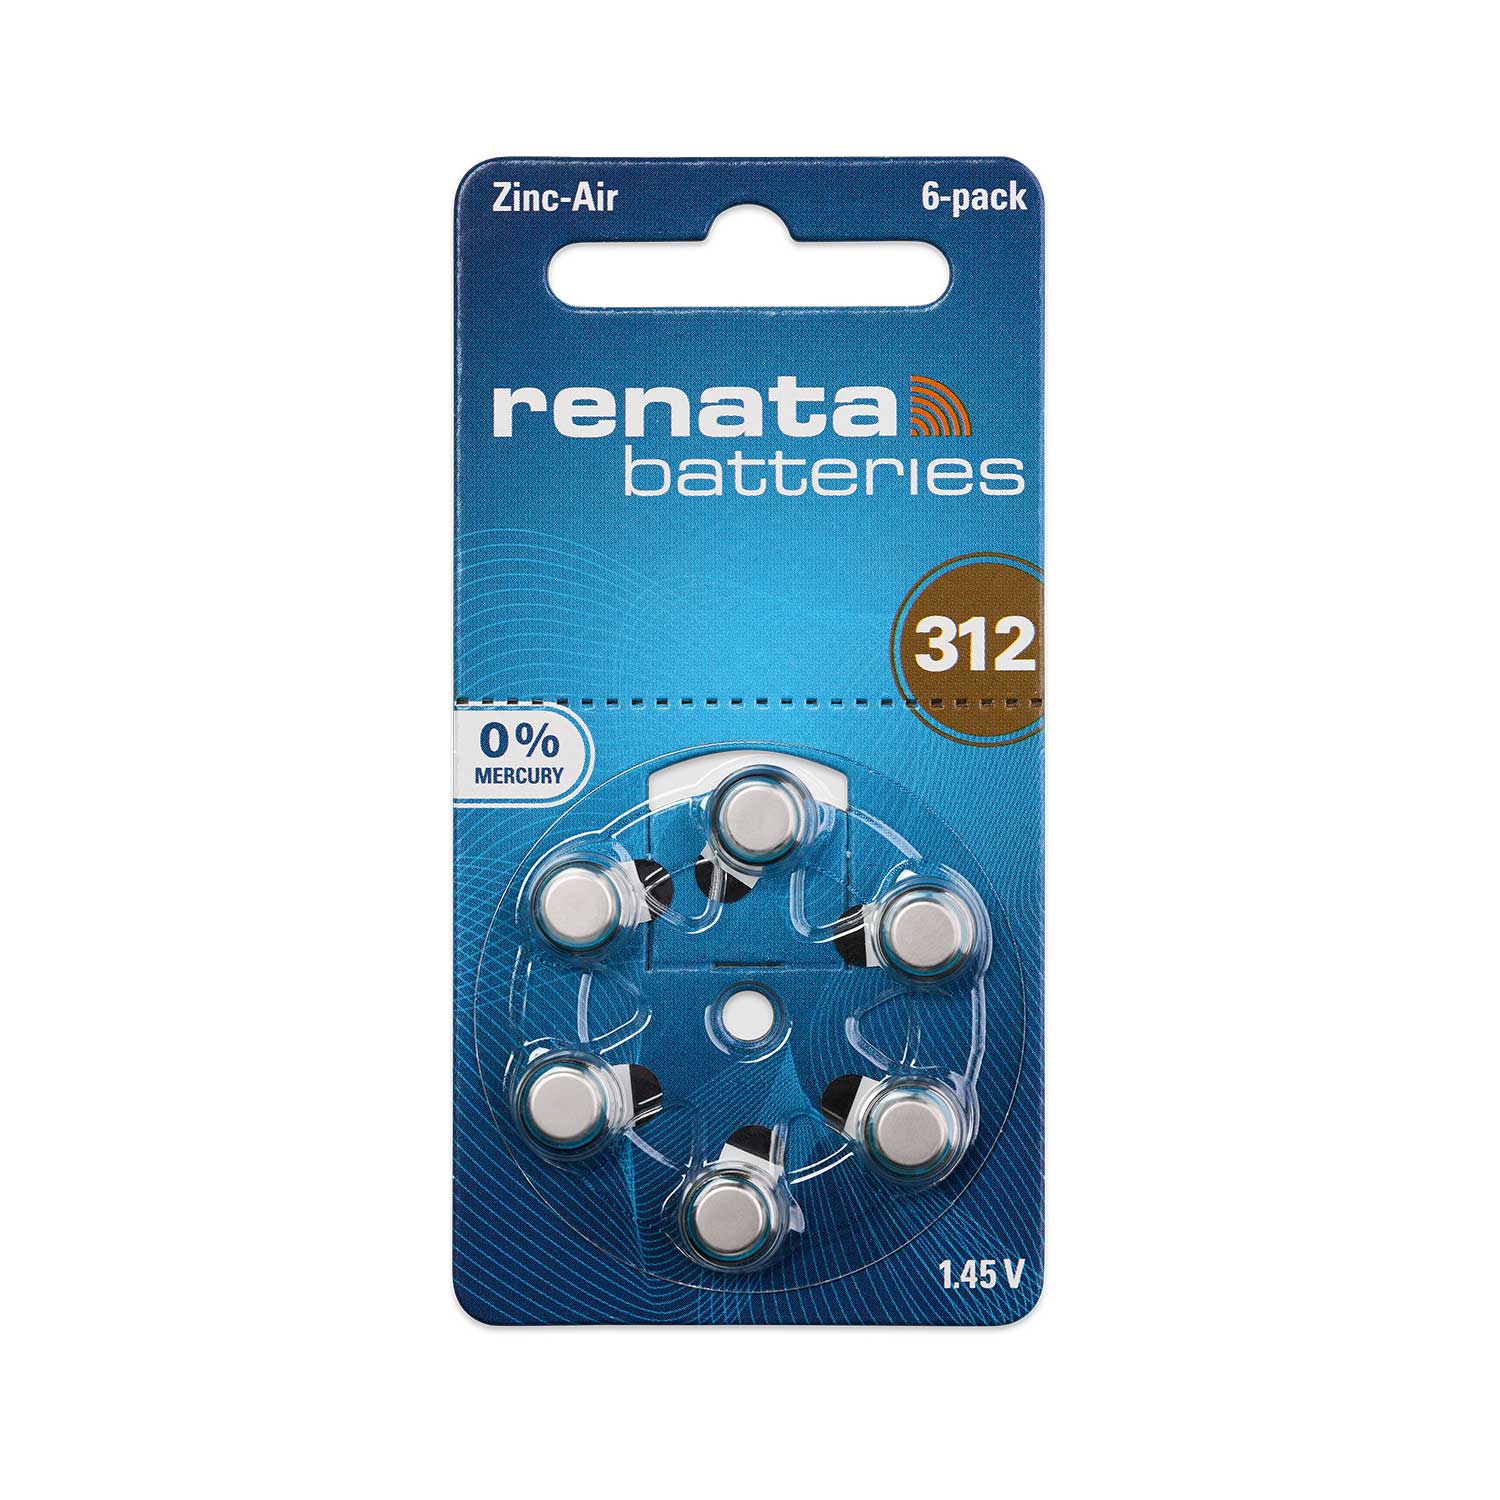 Renata 312 hearing aid button cell <br/>Brand: Renata / Manufacturer name: 312